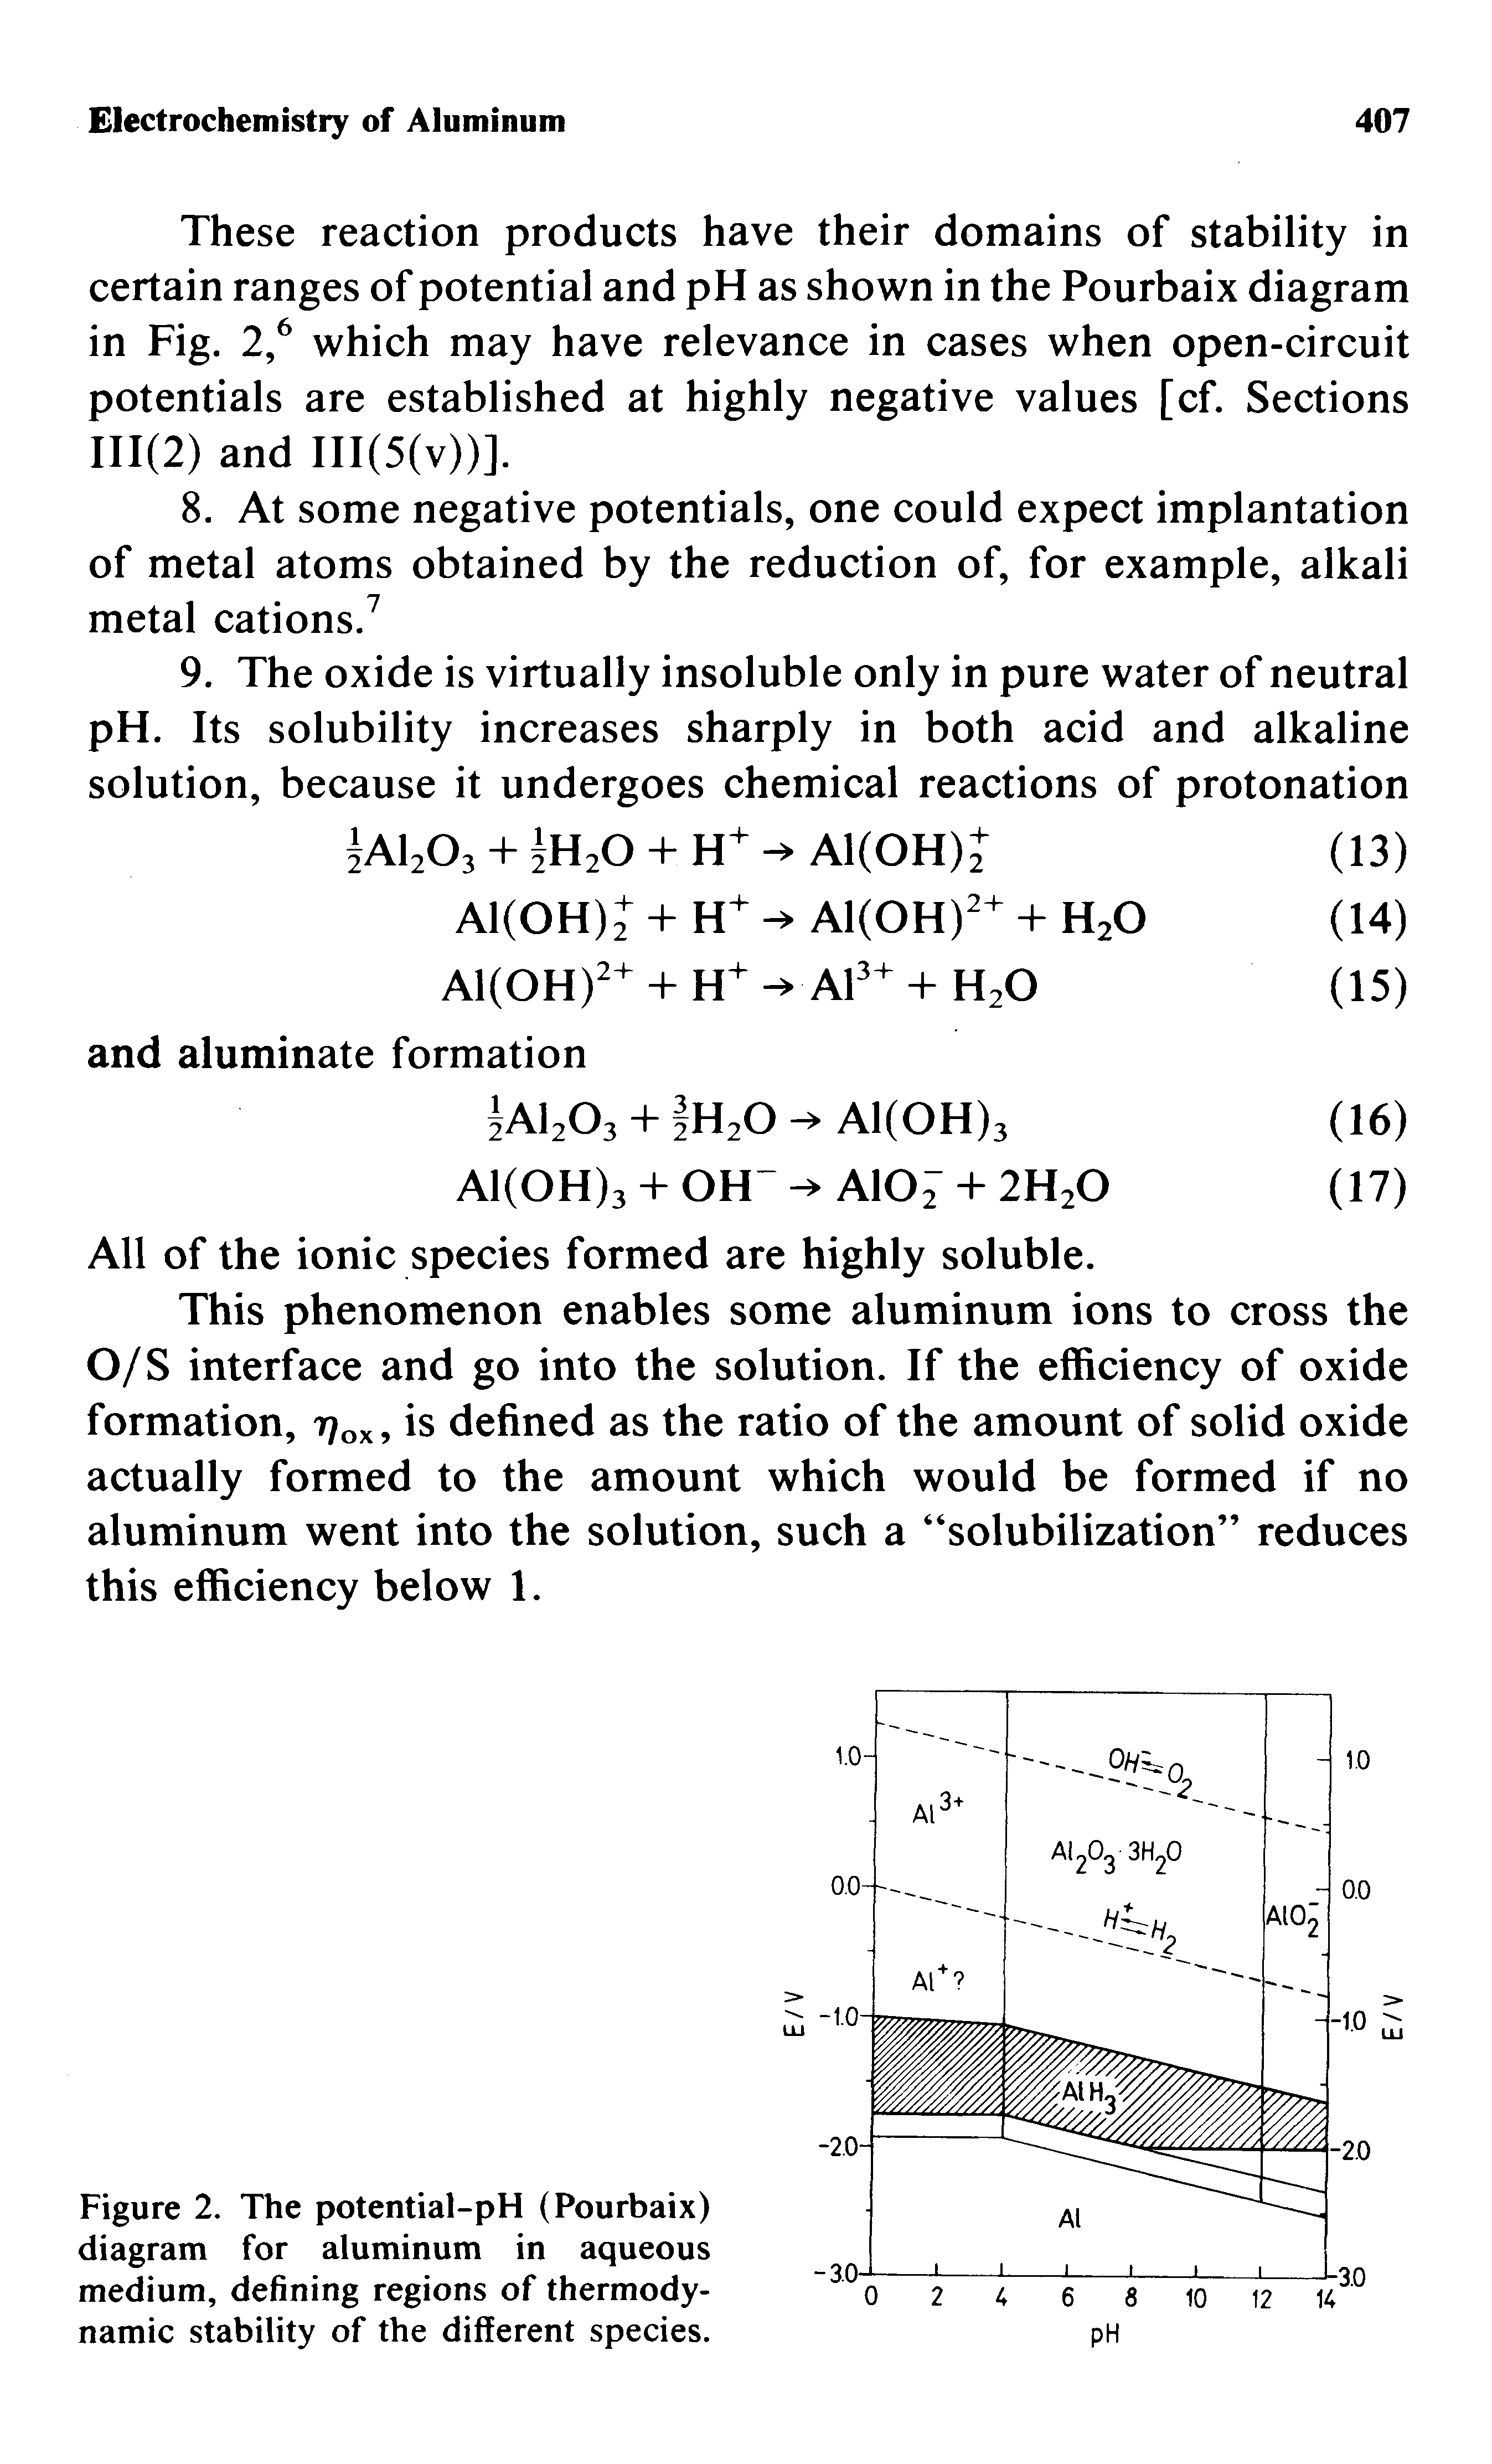 Figure 2. The potential-pH (Pourbaix) diagram for aluminum in aqueous medium, defining regions of thermodynamic stability of the different species.